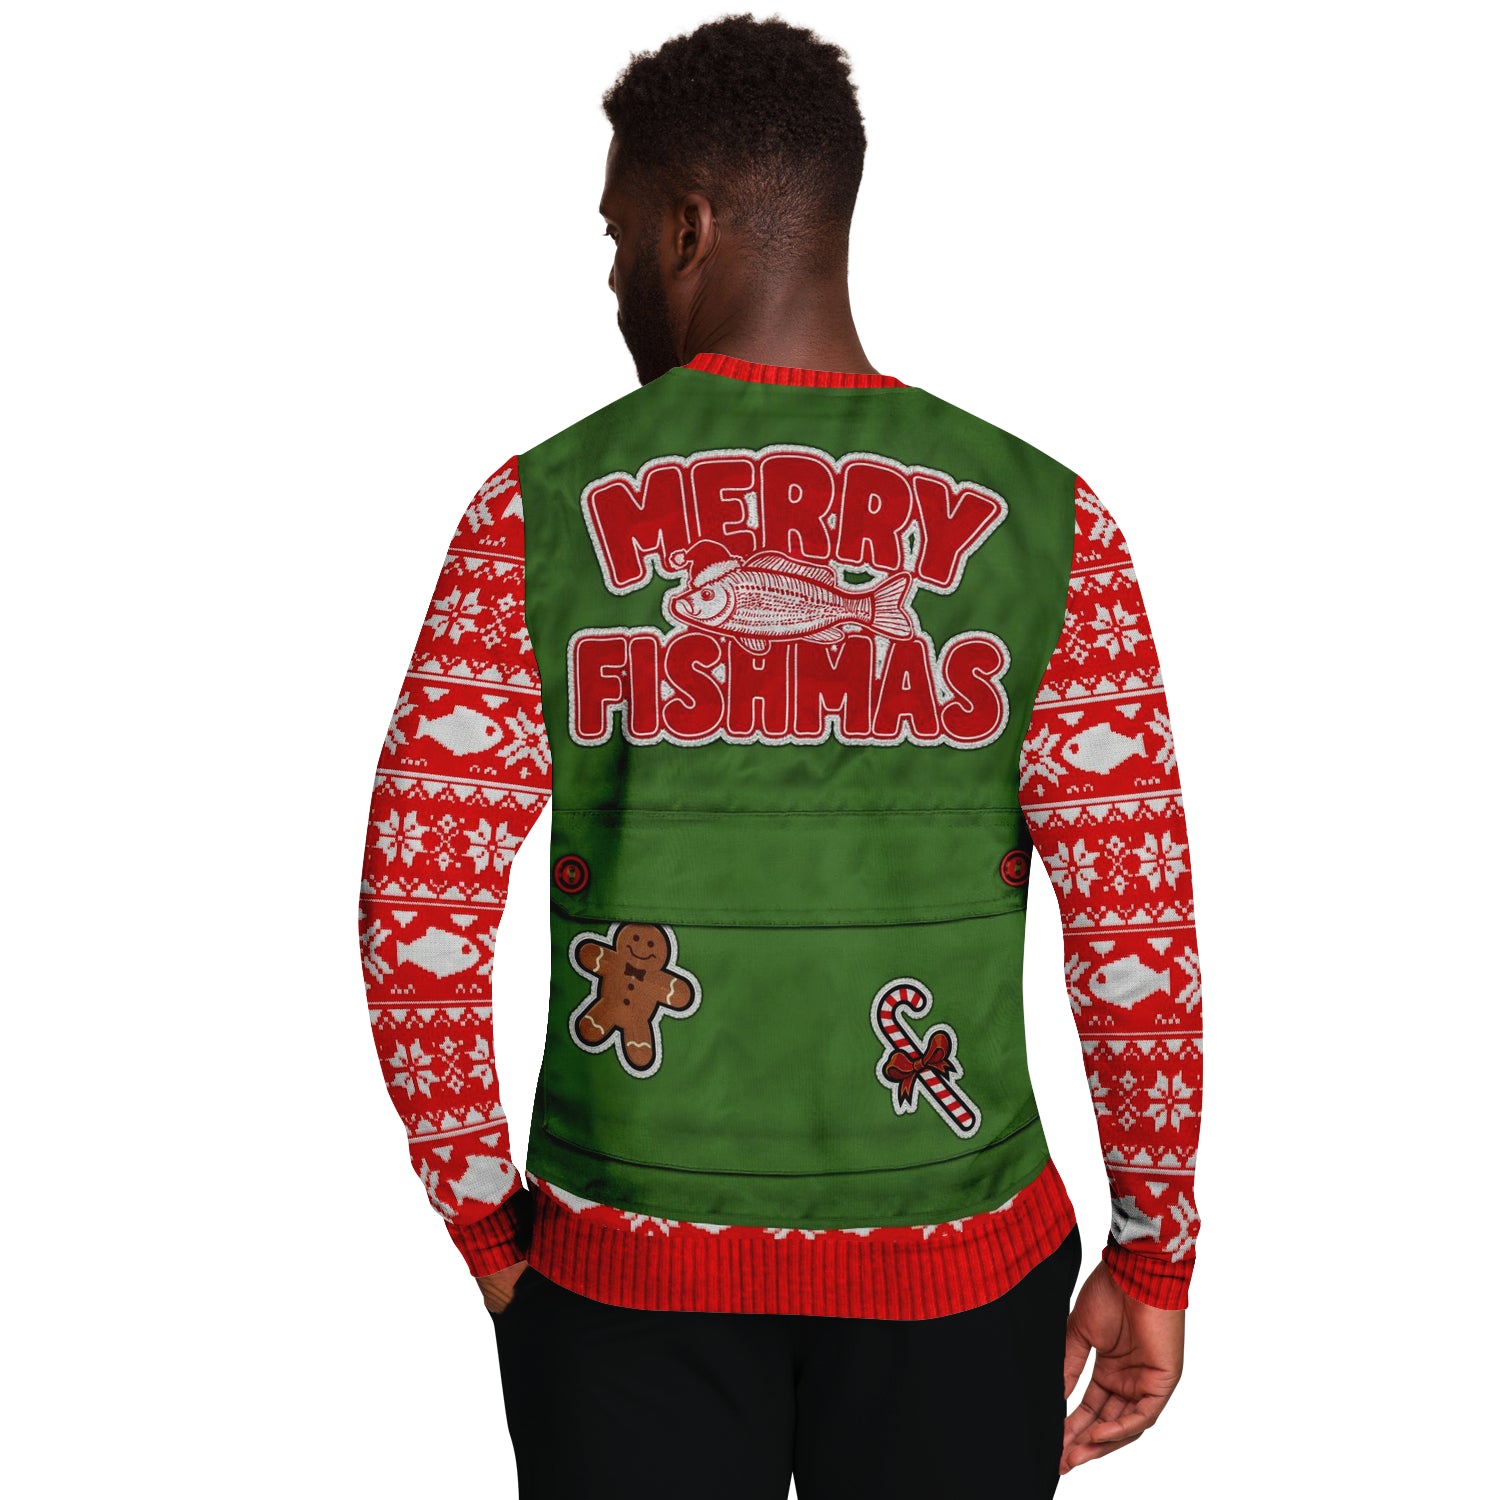 Merry Fishmas - Ugly Christmas Sweater